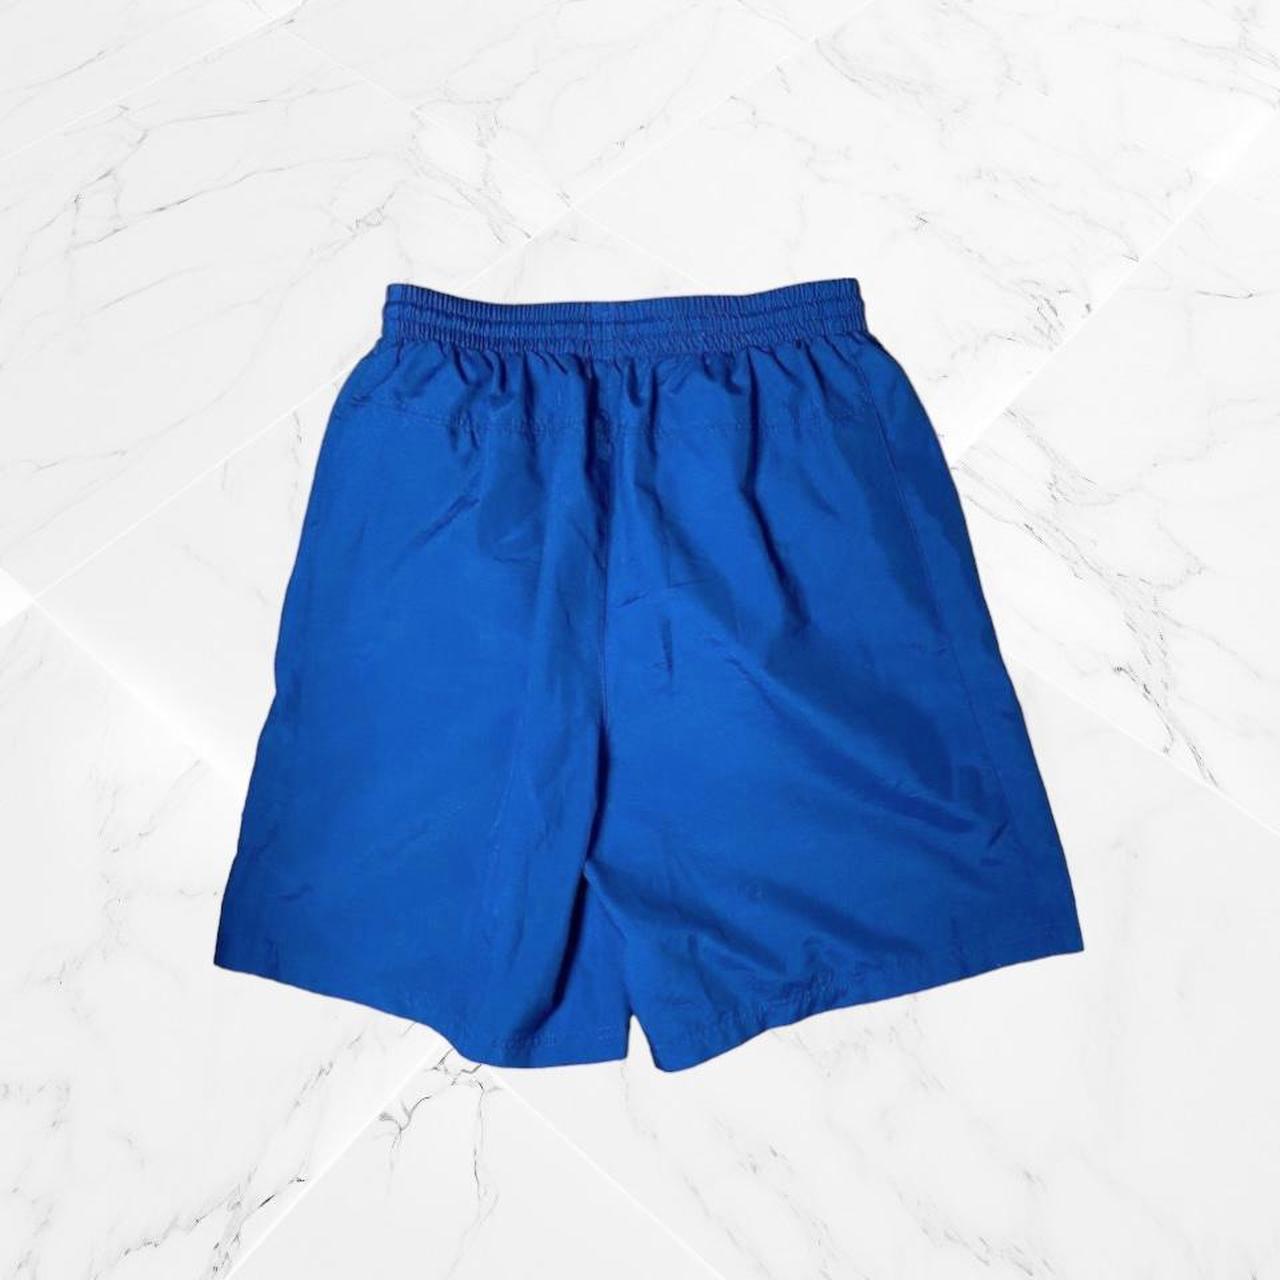 Umbro Men's Blue and White Shorts | Depop